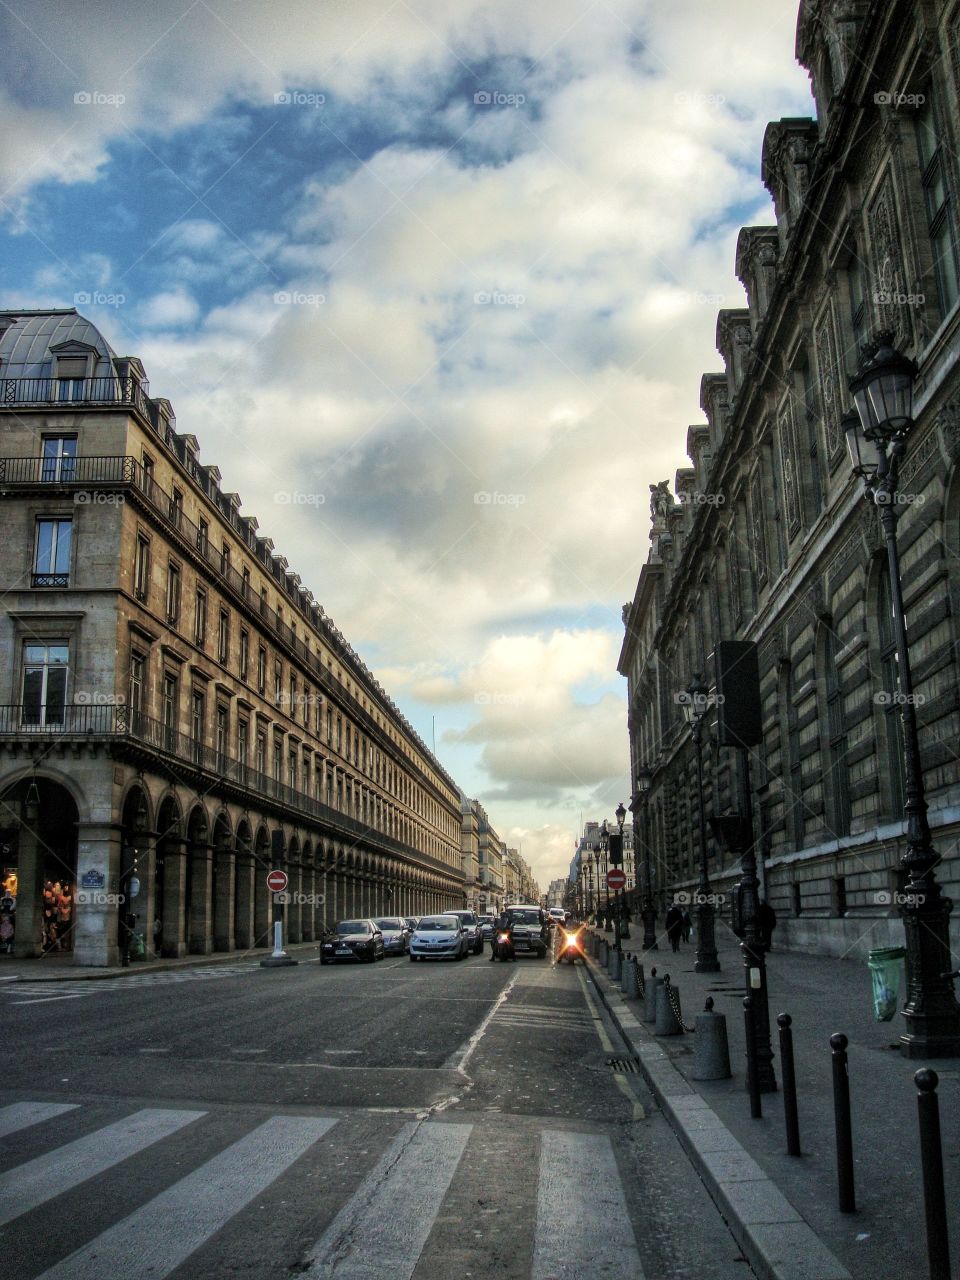 Street in Paris with old buildings